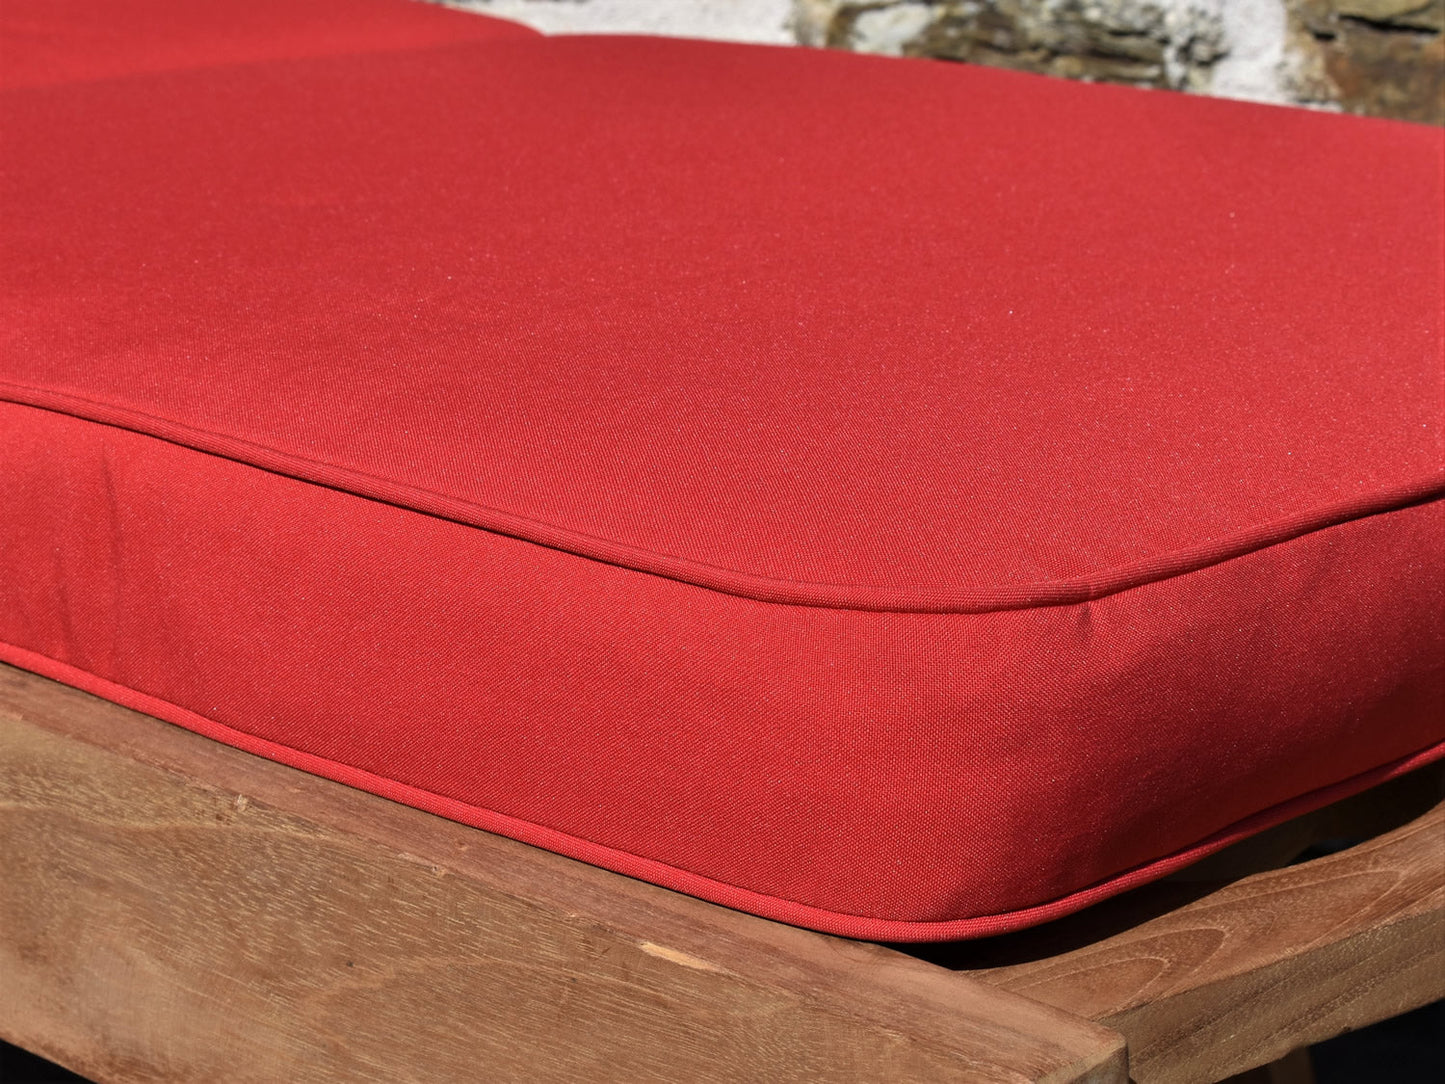 close-up detail red garden sunlounger cushion fabric